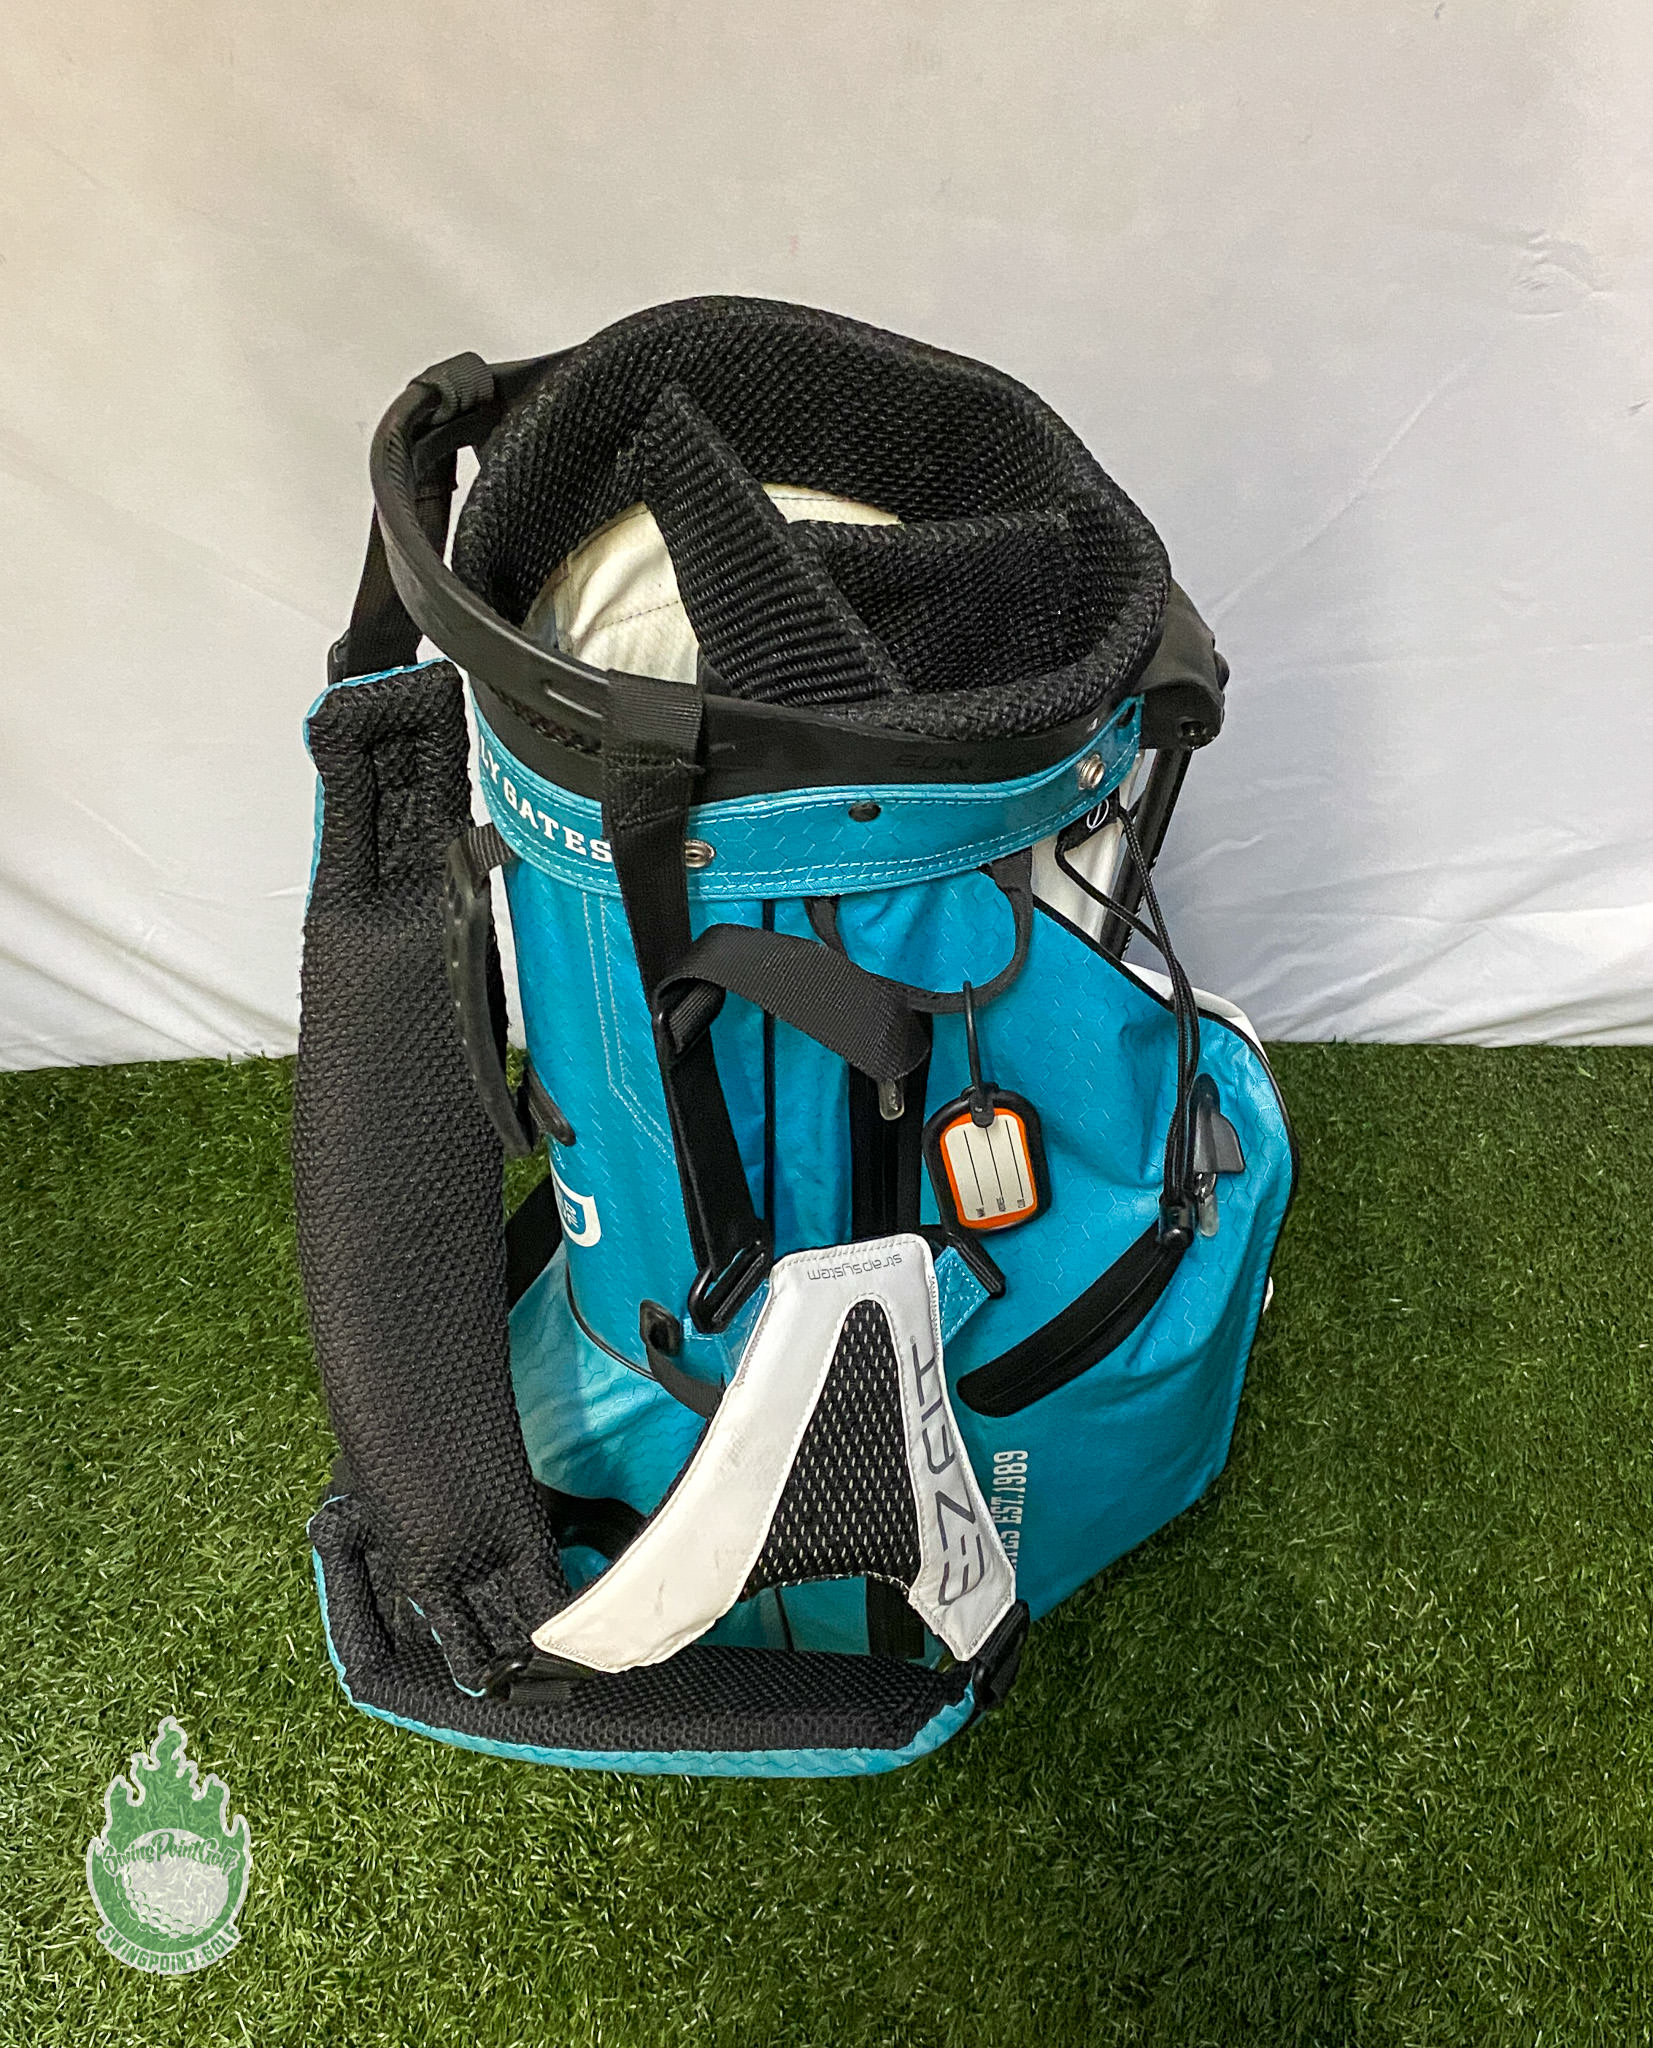 Pearly gate Golf bag equipment high quality golf clubs bag UNISEX